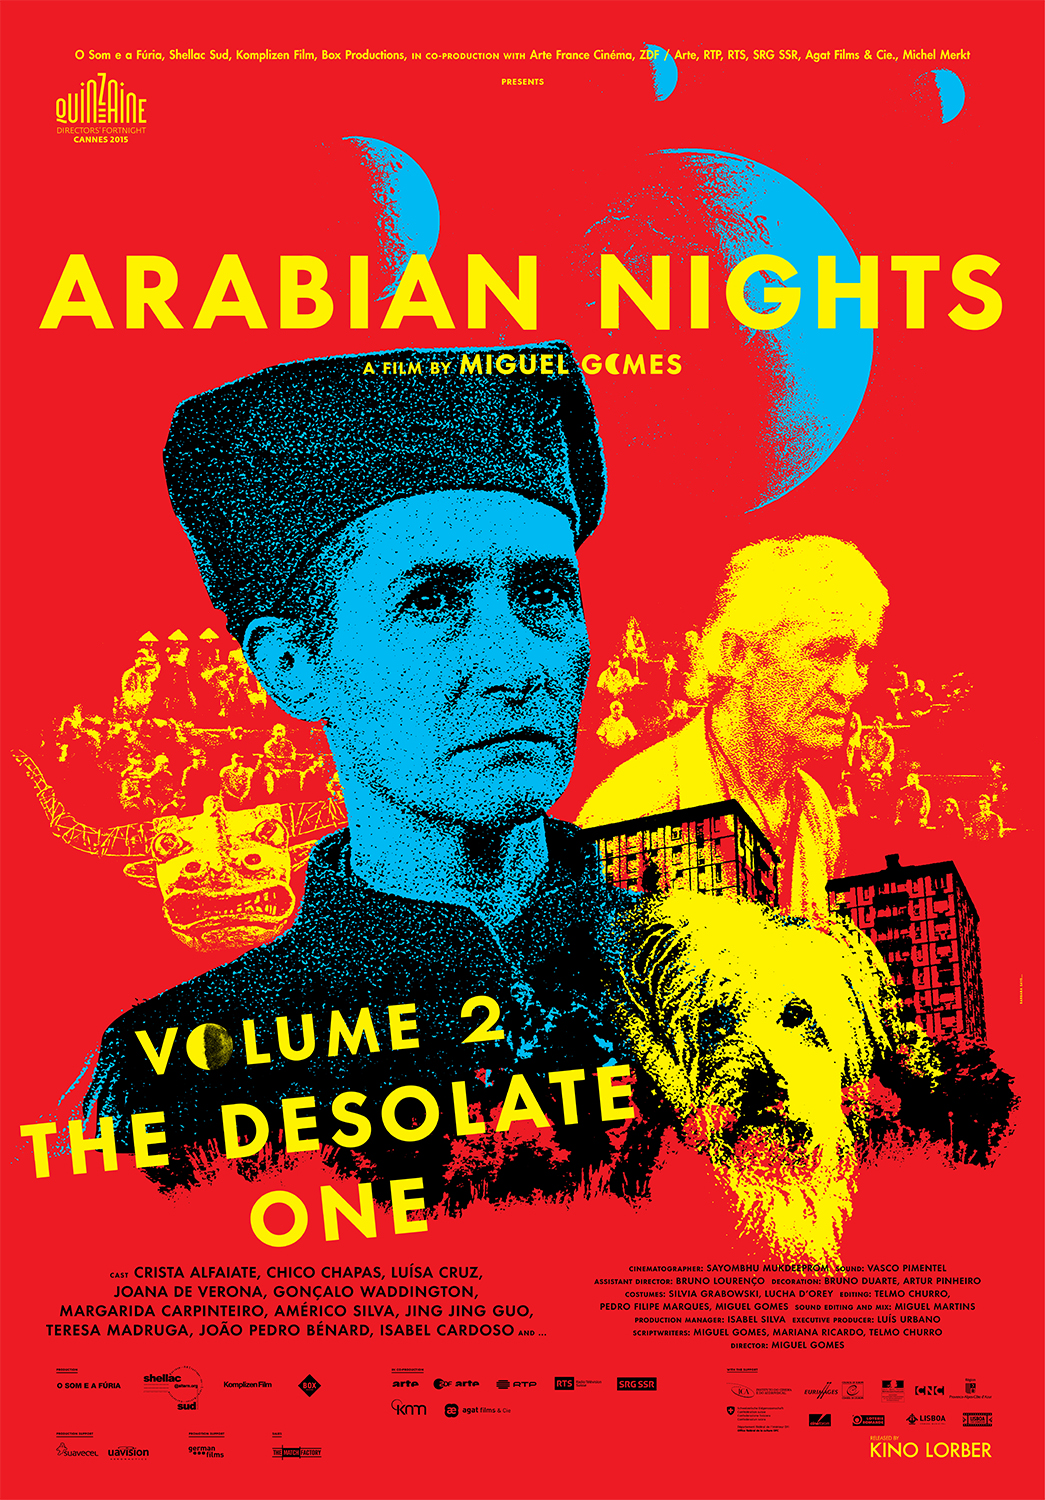 ARABIAN NIGHTS: VOLUME 2 THE DESOLATE ONE